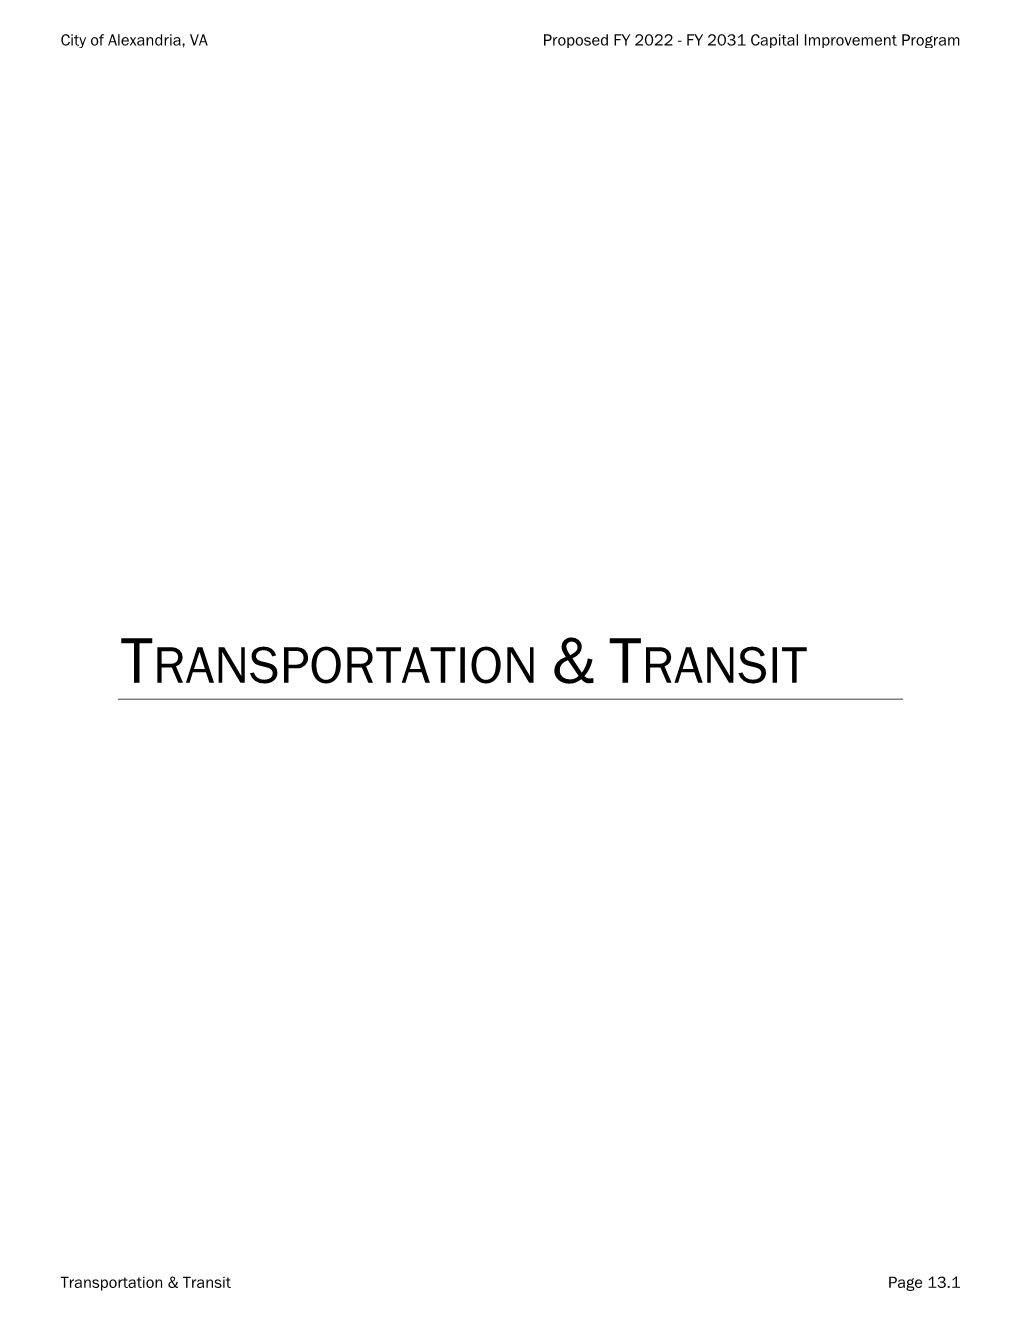 FY 2022 Transportation and Transit Summary